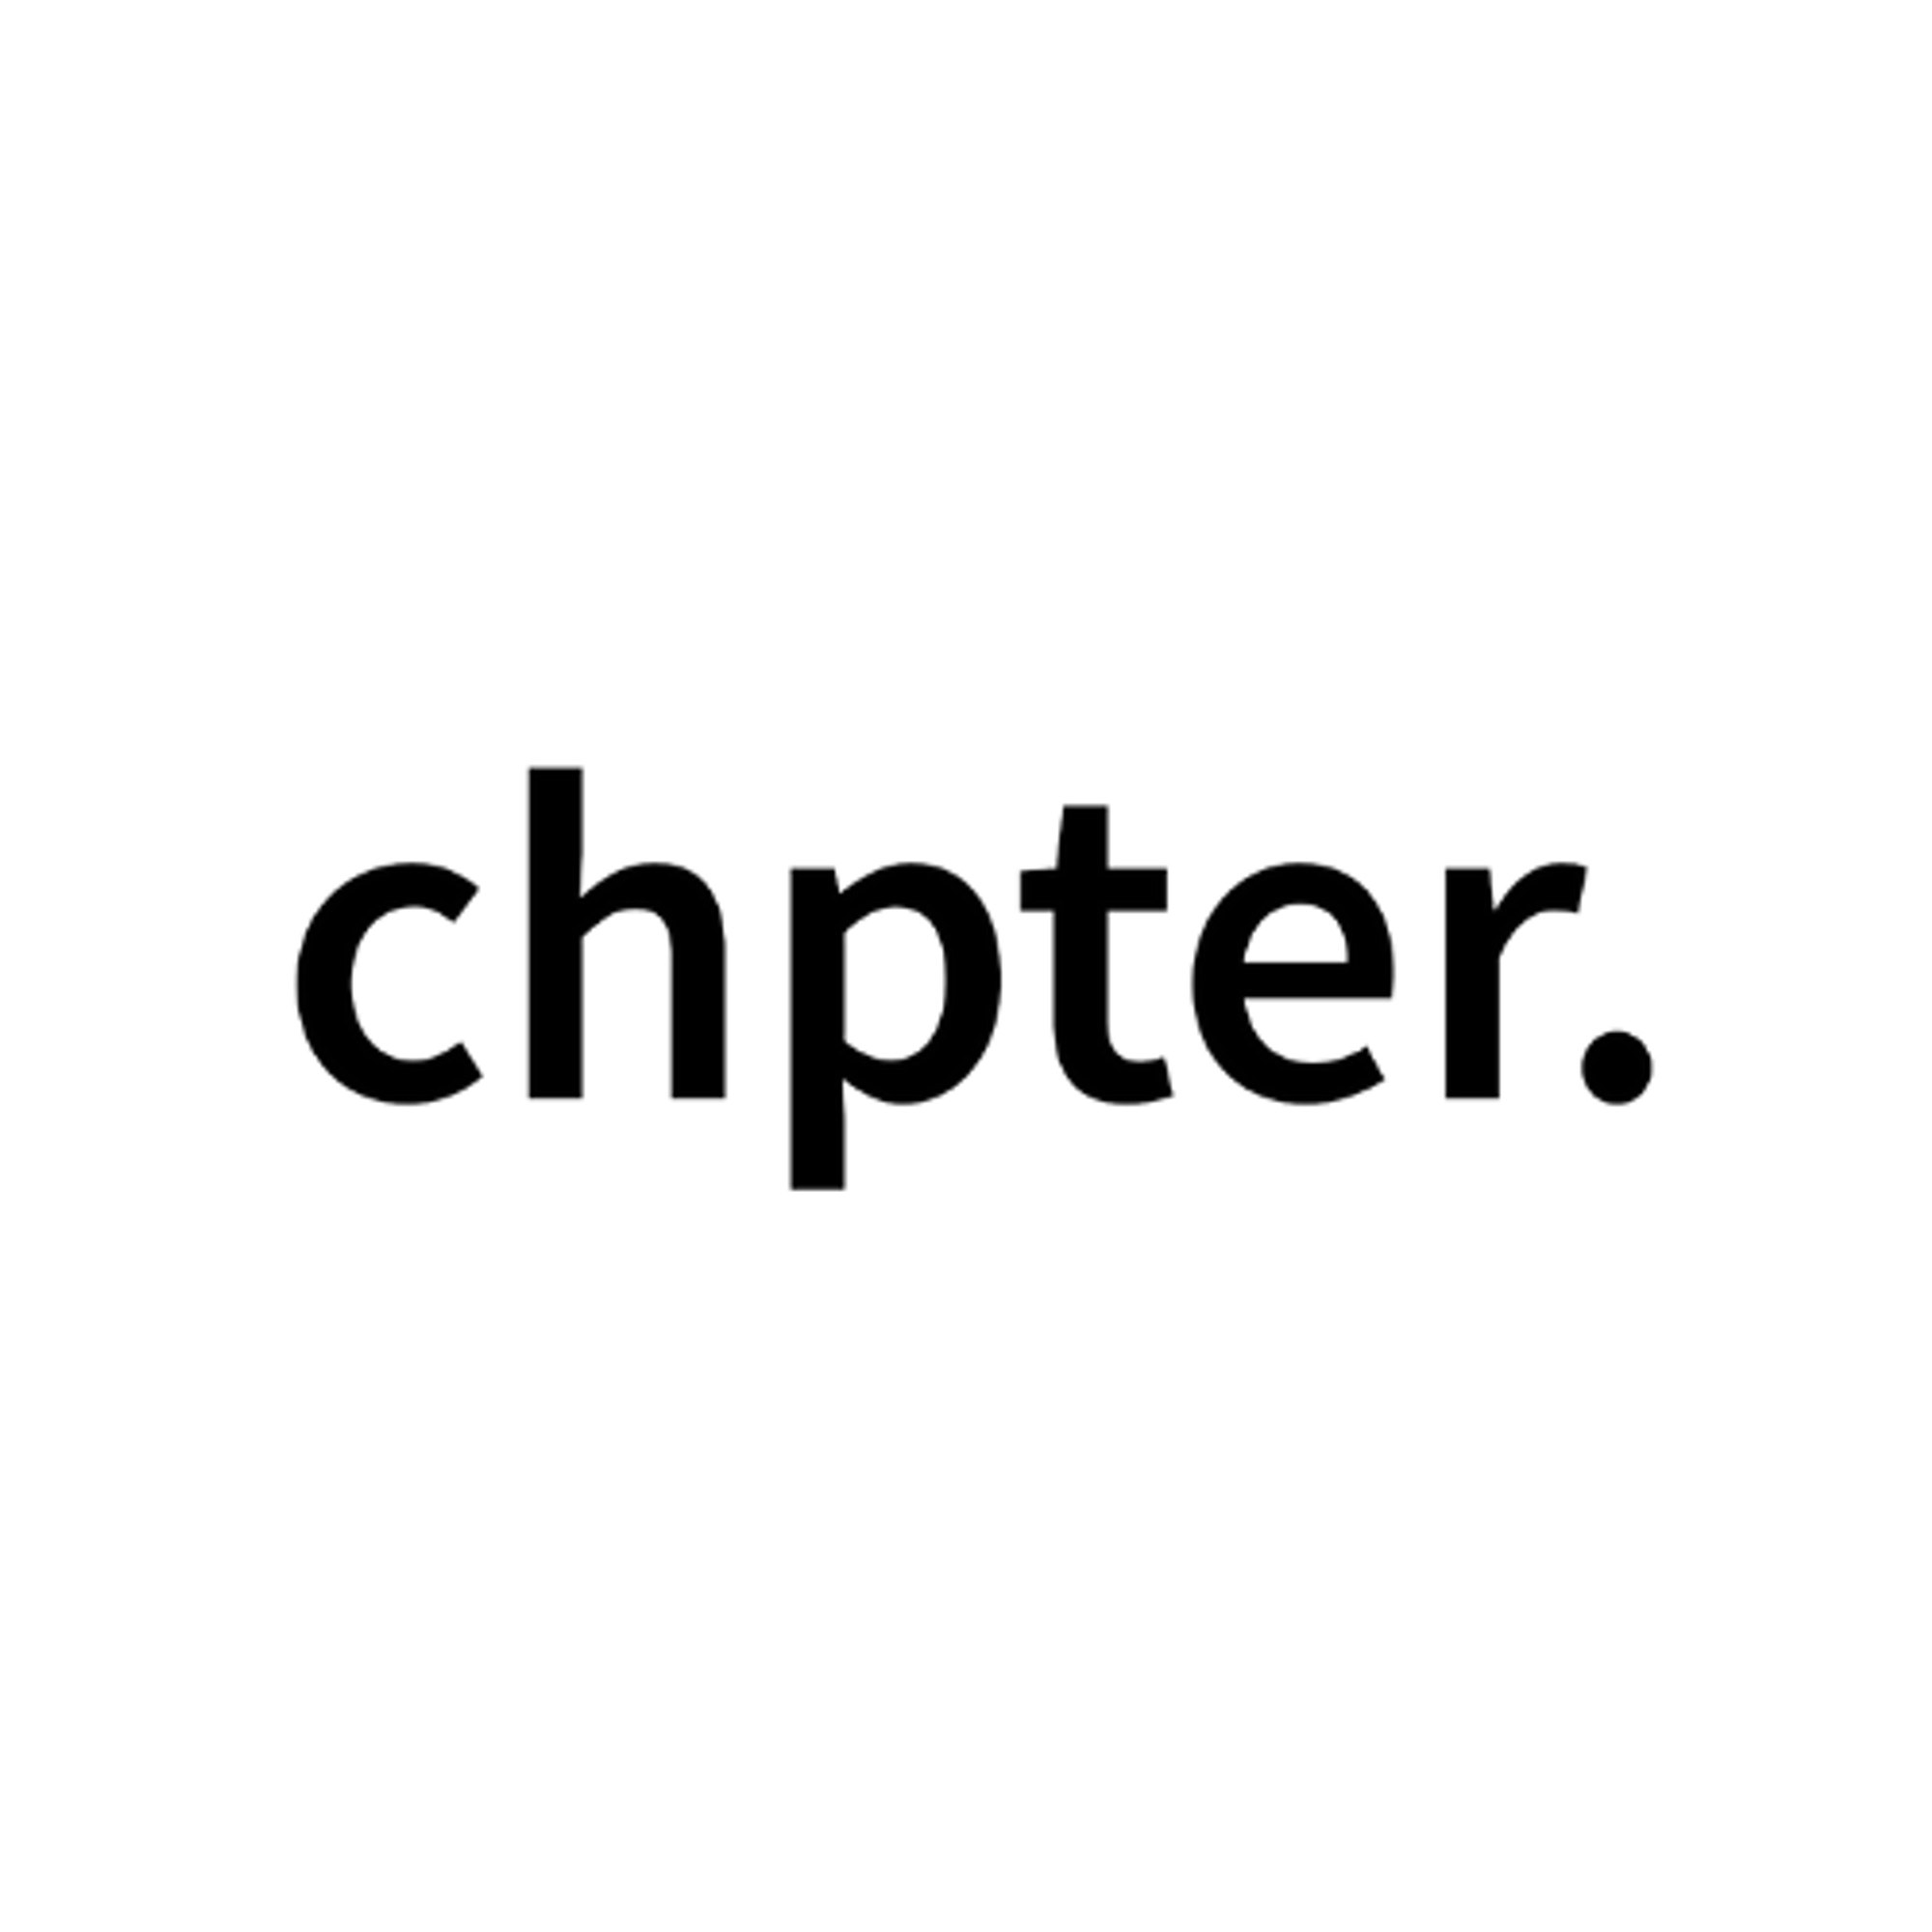 chpter. API docs